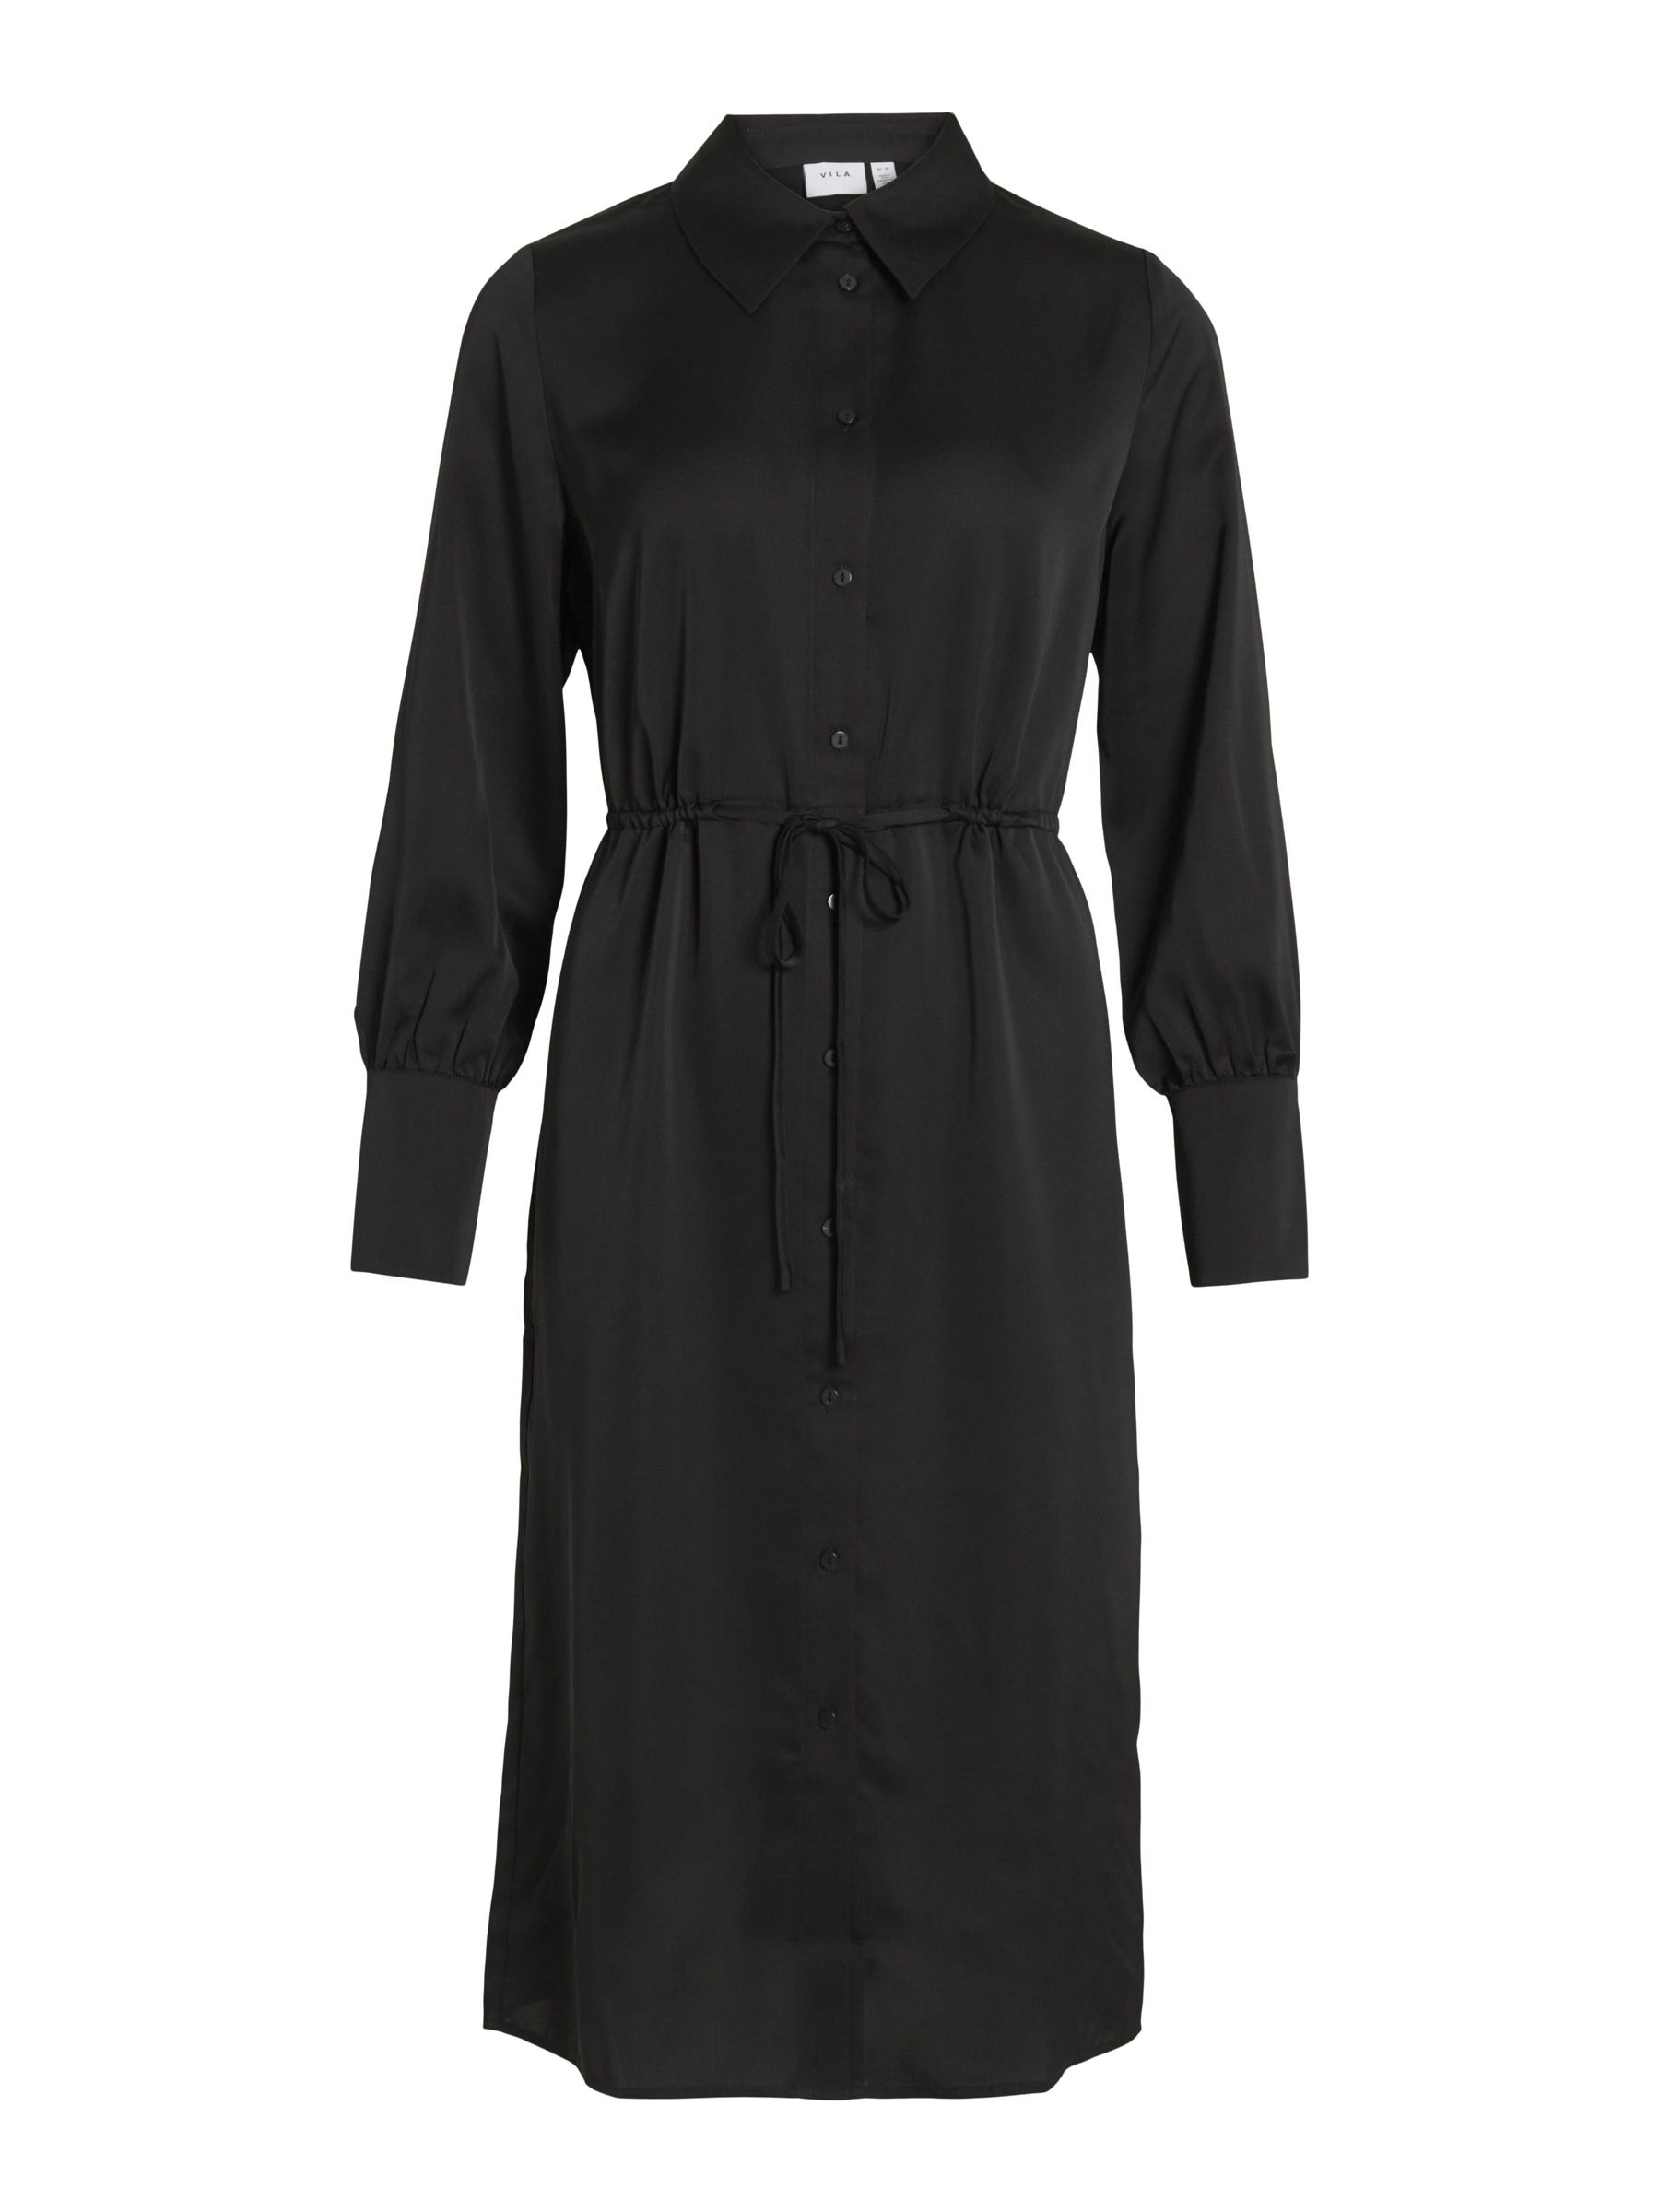 Long Sleeve Tiered Shirt Dress In Black, VILA